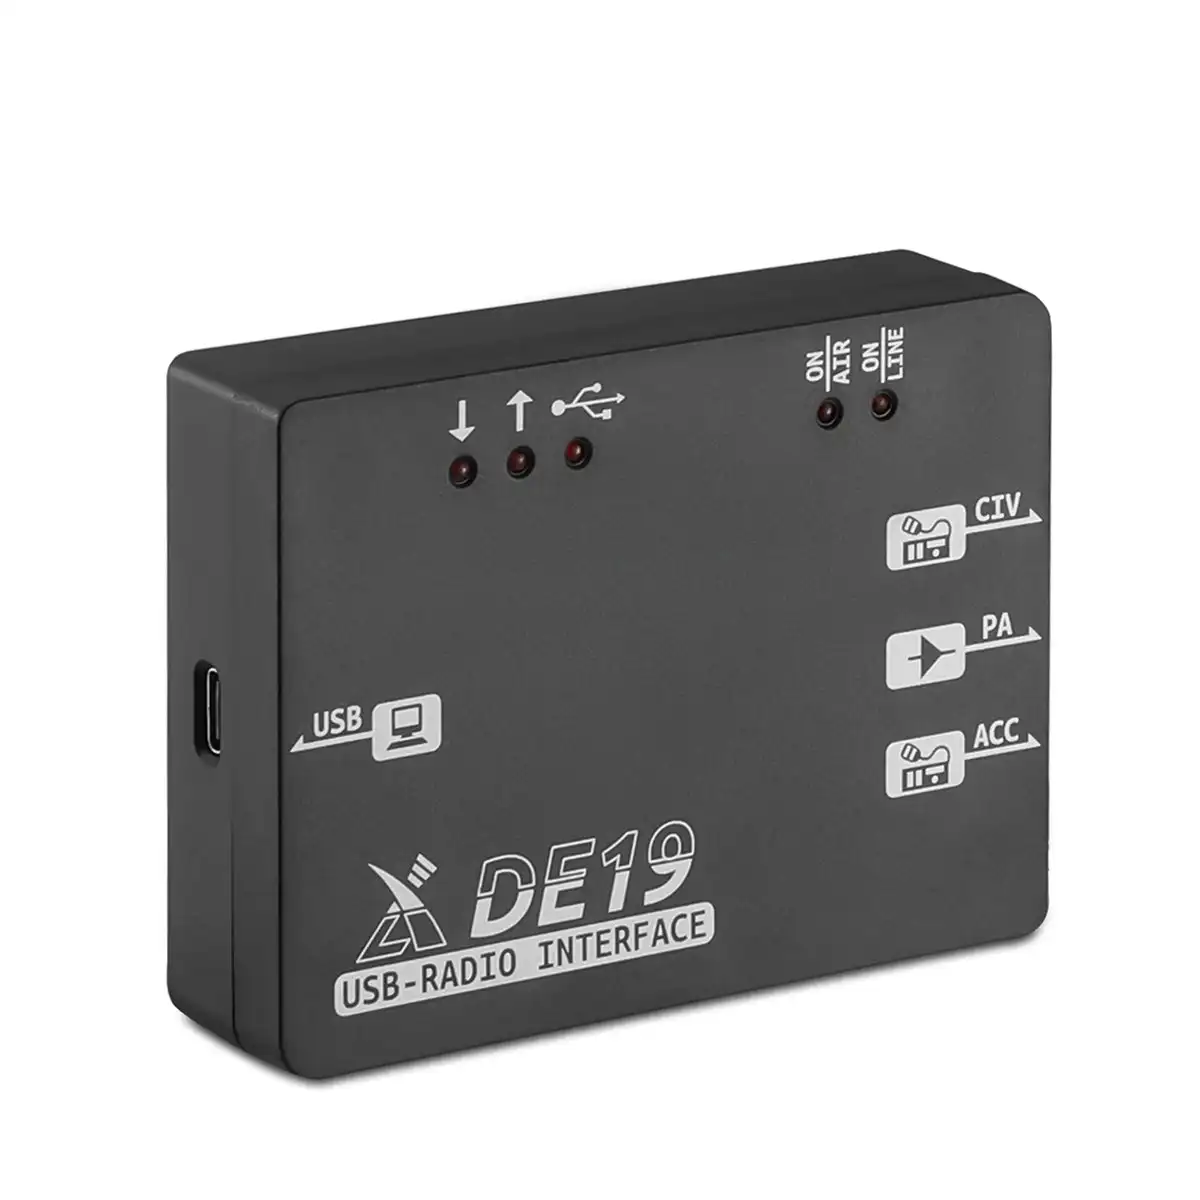 xiegu-de-19-de19-external-expansion-adapter-usb-radio-interface-civ-pa-acc-for-g90-g90s-g106-g106c-xpa125b